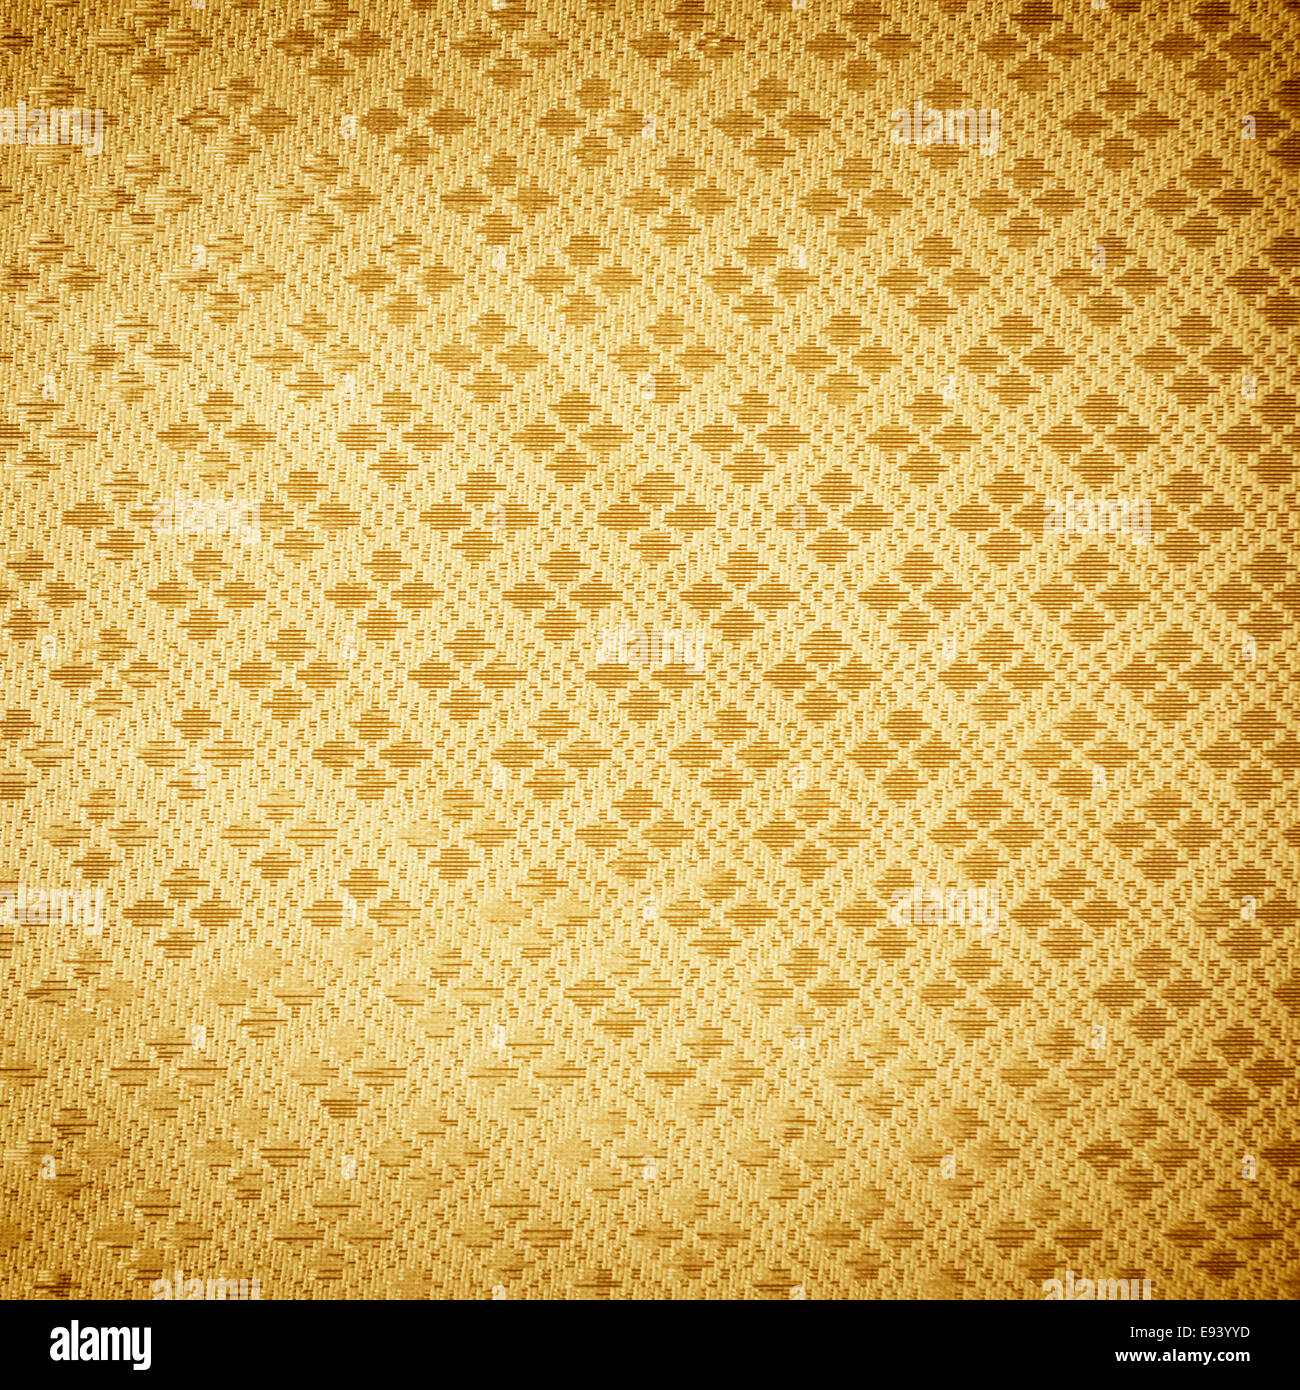 Golden Abstract Background Wallpaper Texture Of Silk Fabric